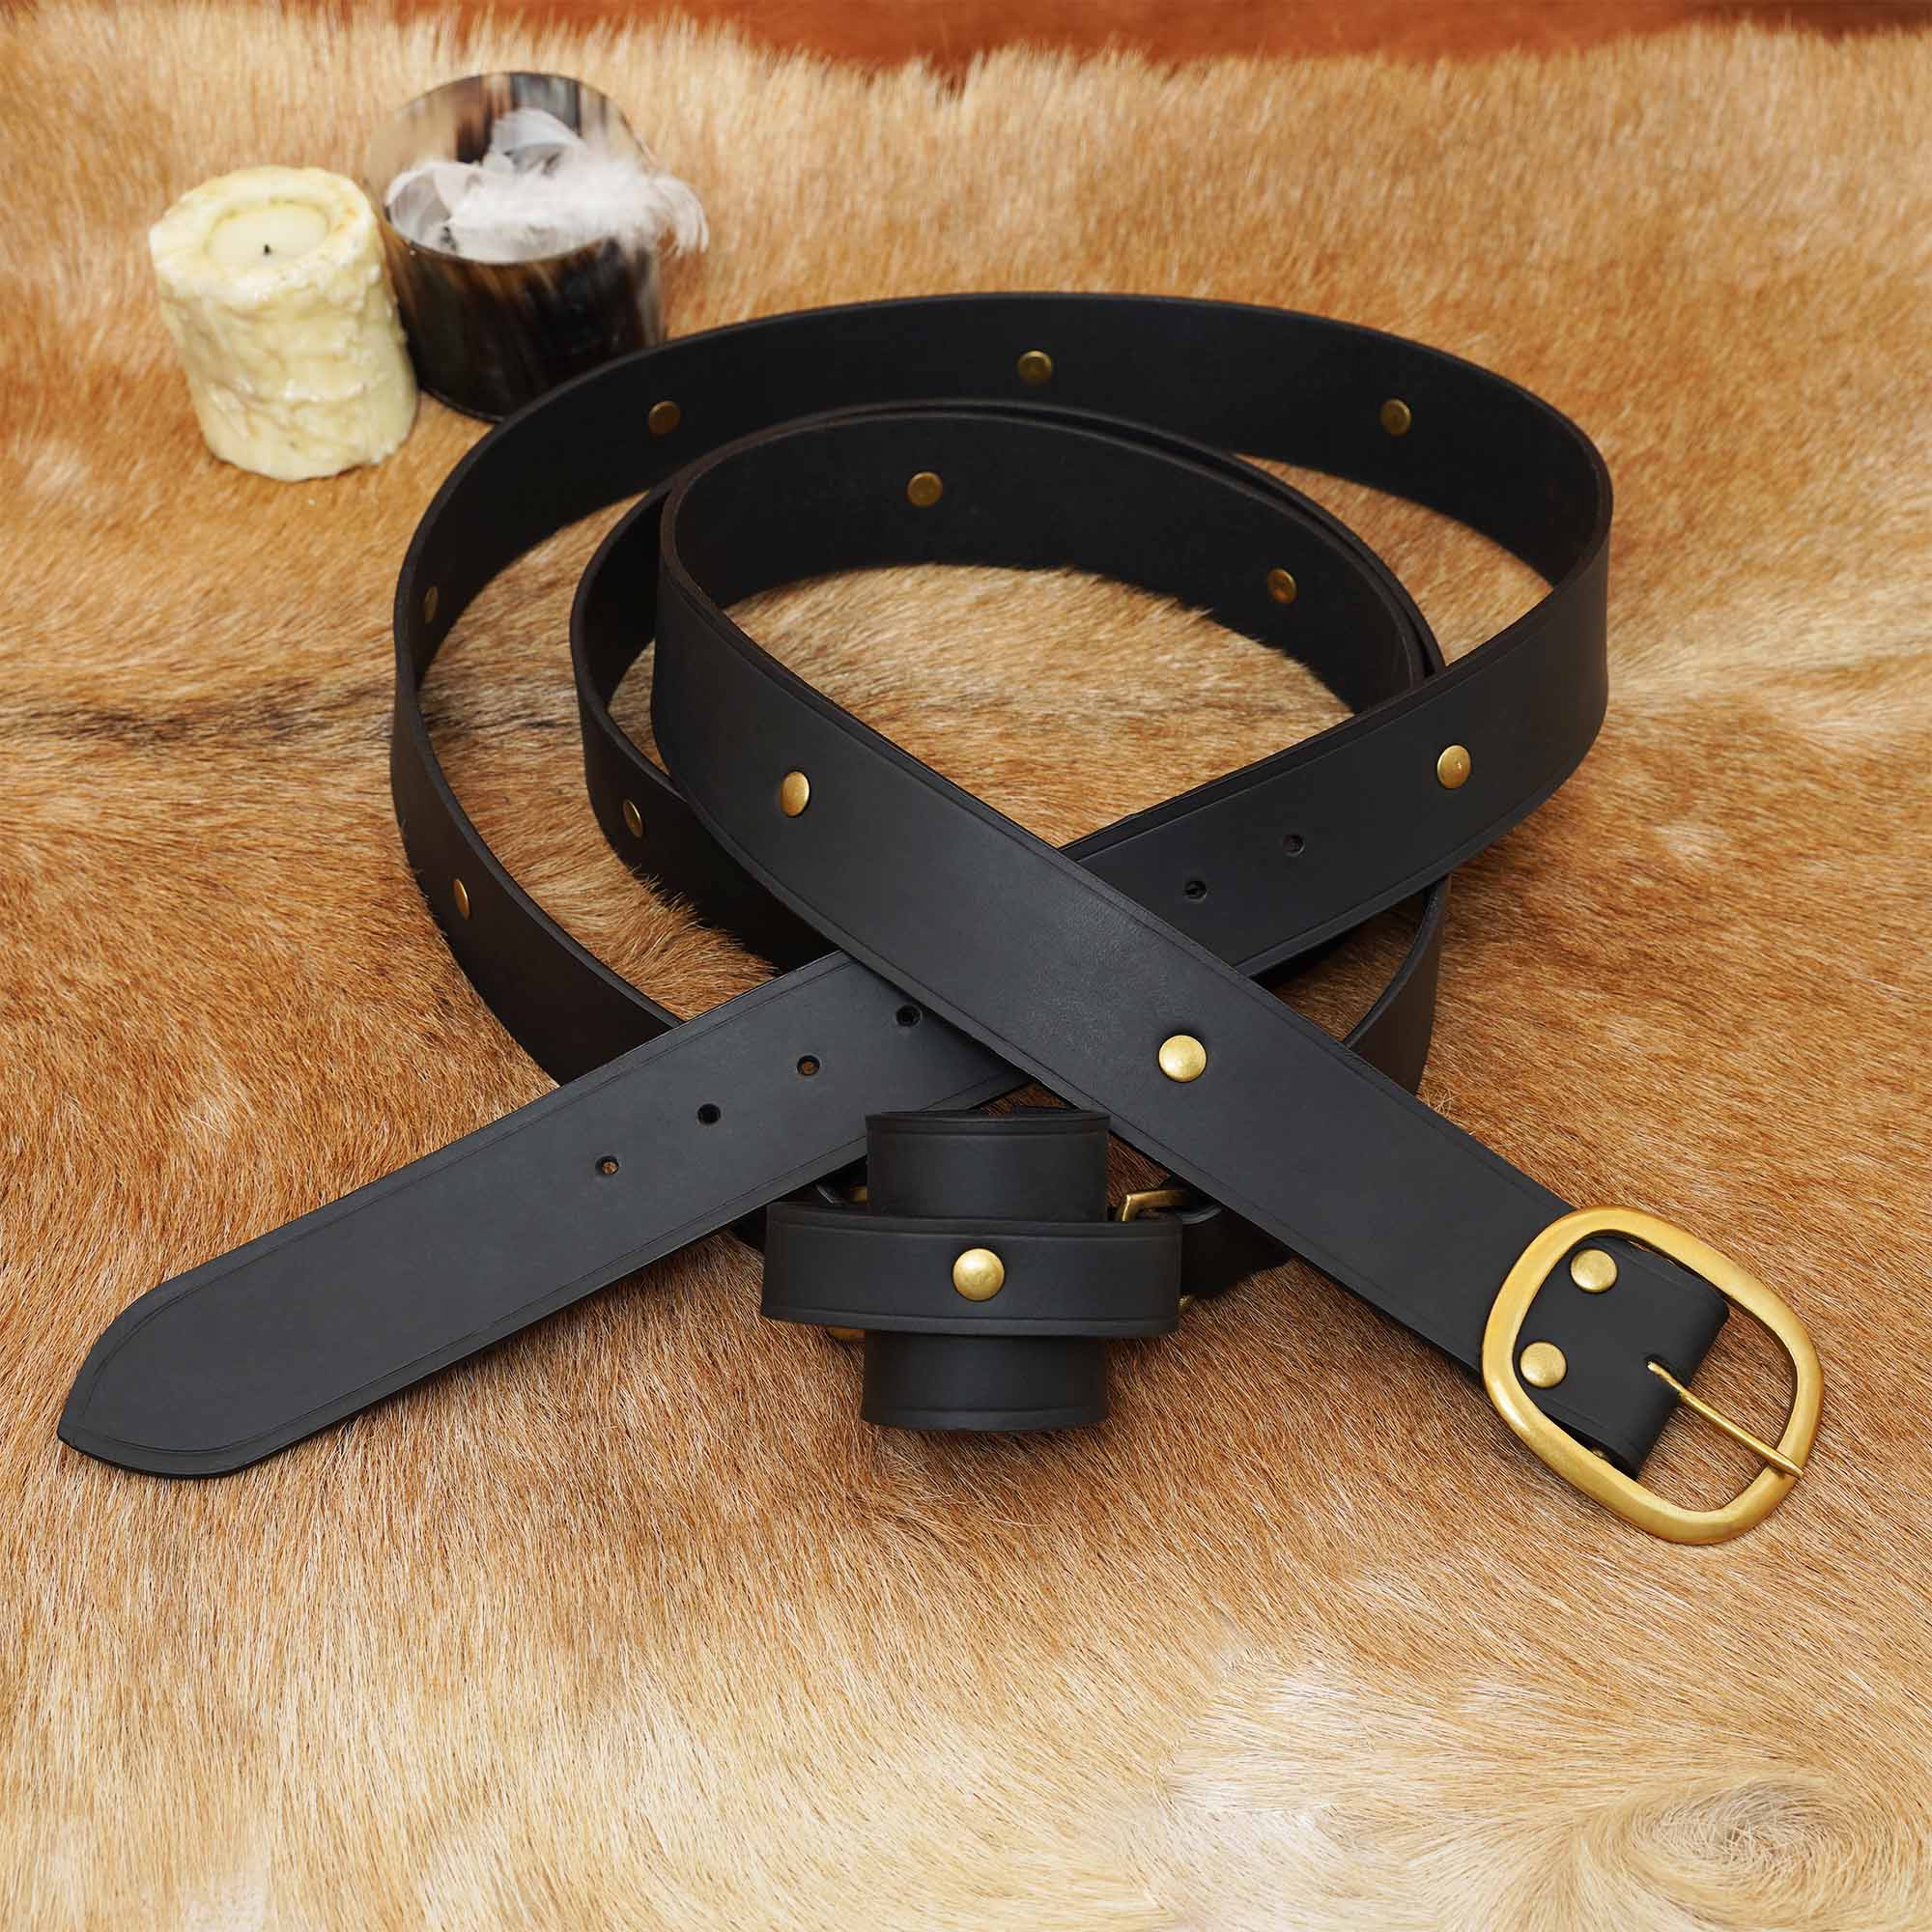 Patent leather belt